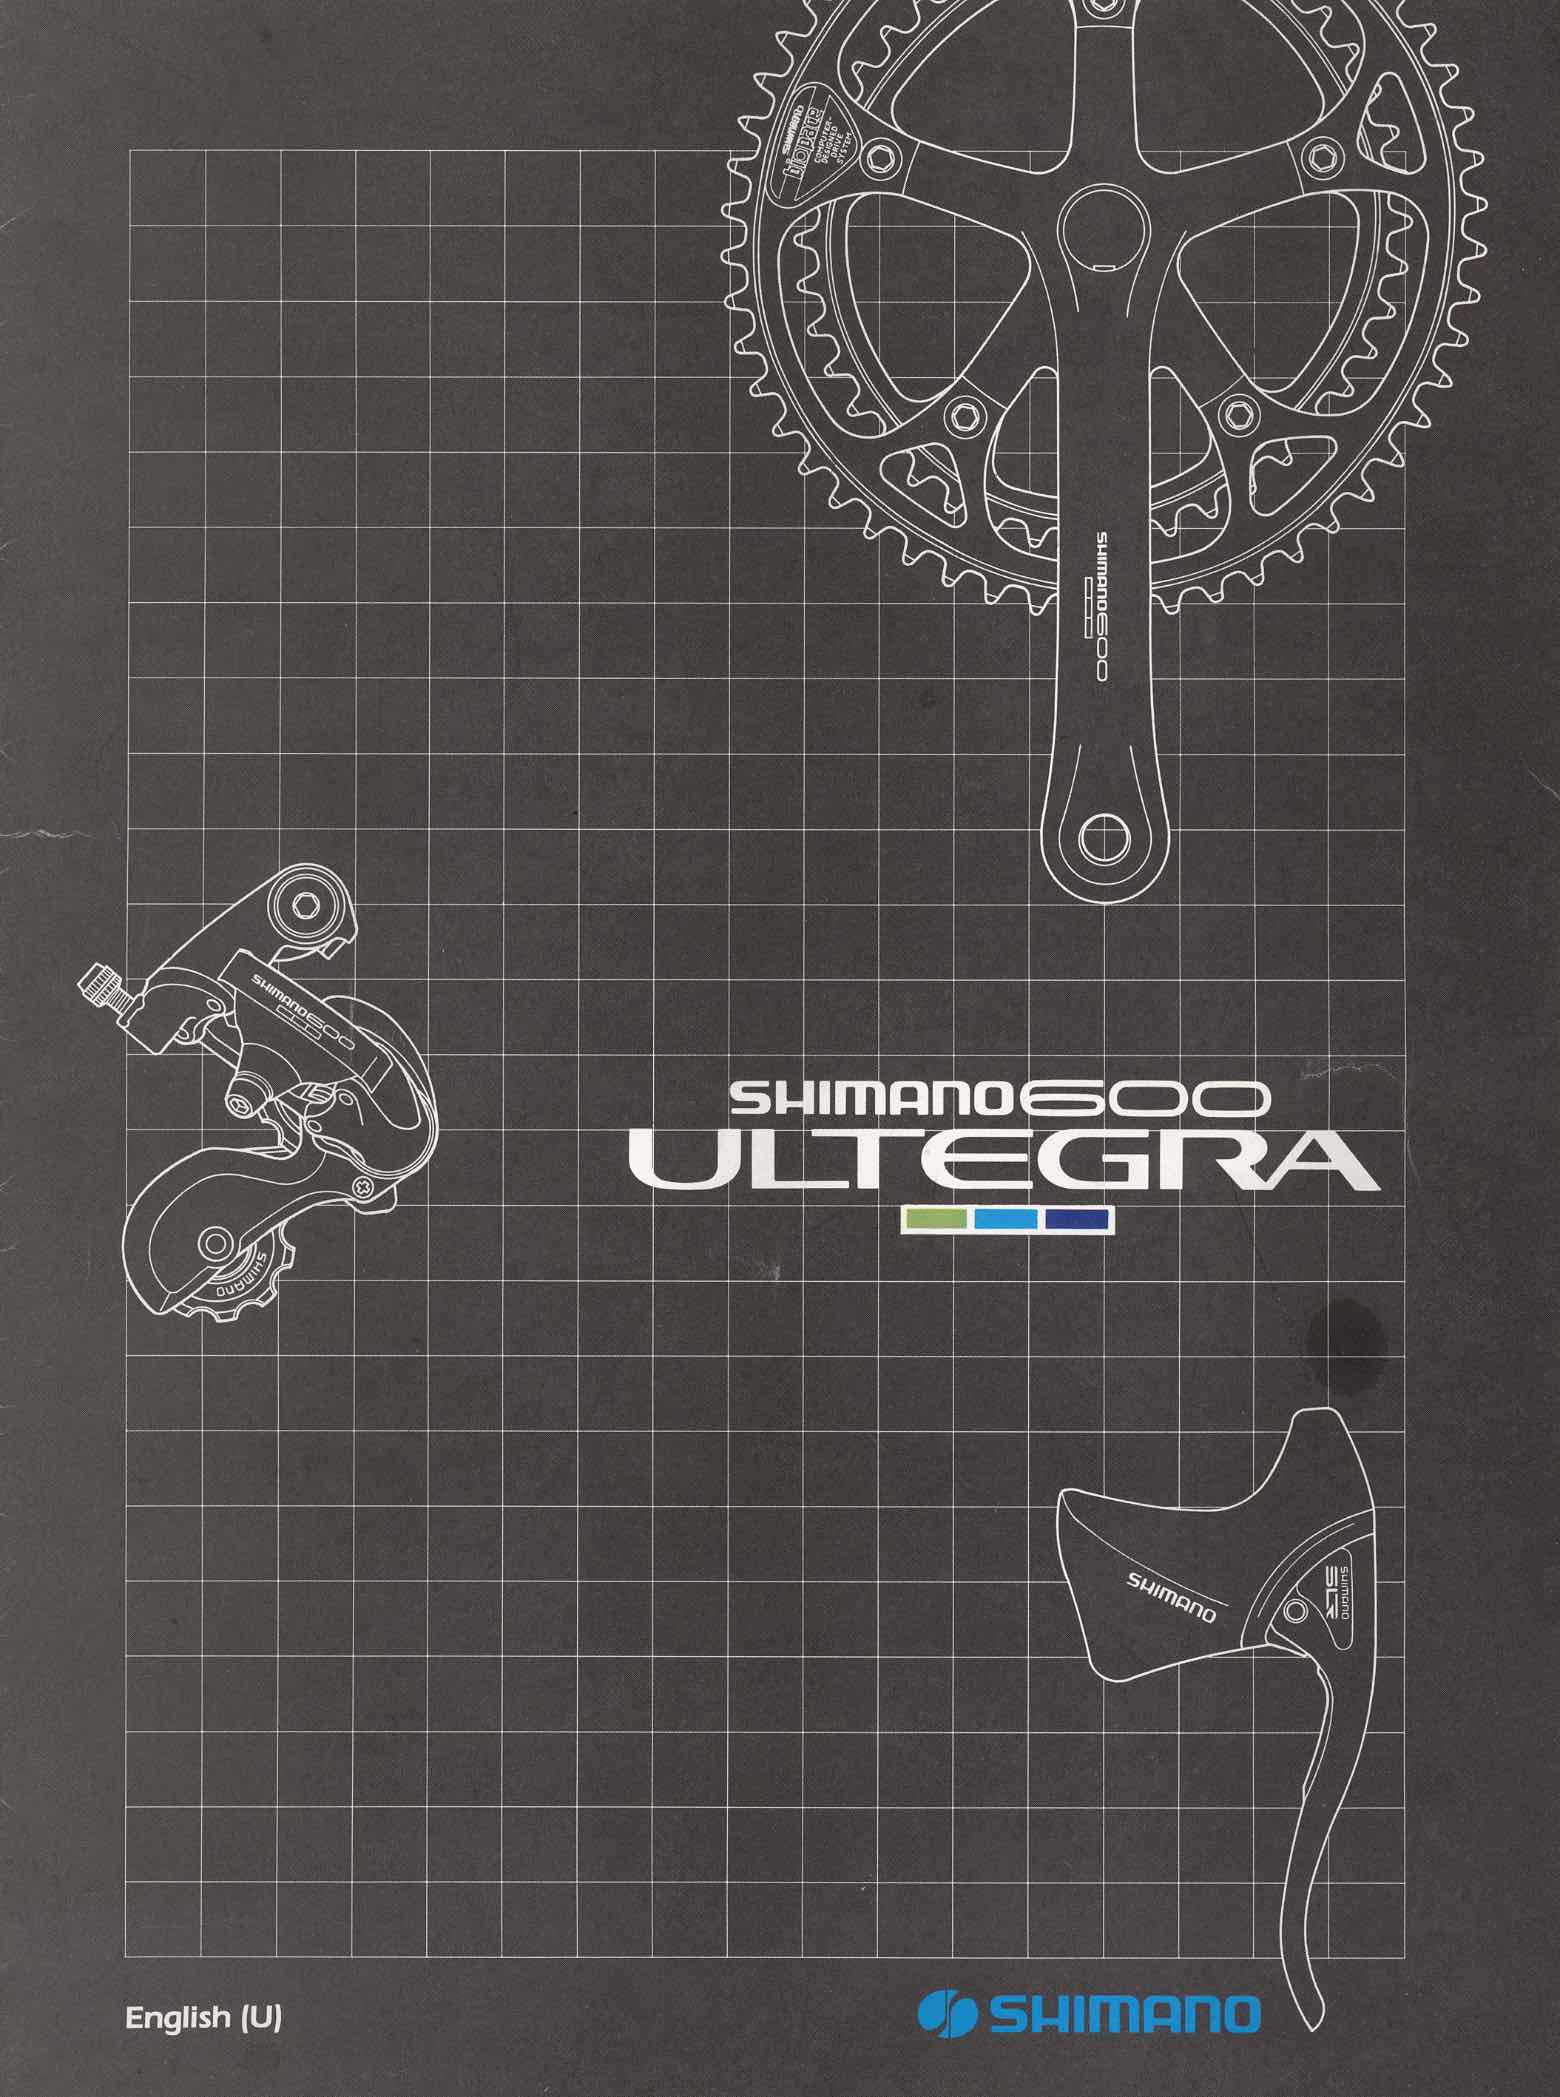 Shimano 600 Ultegra - brochure scan 1 main image